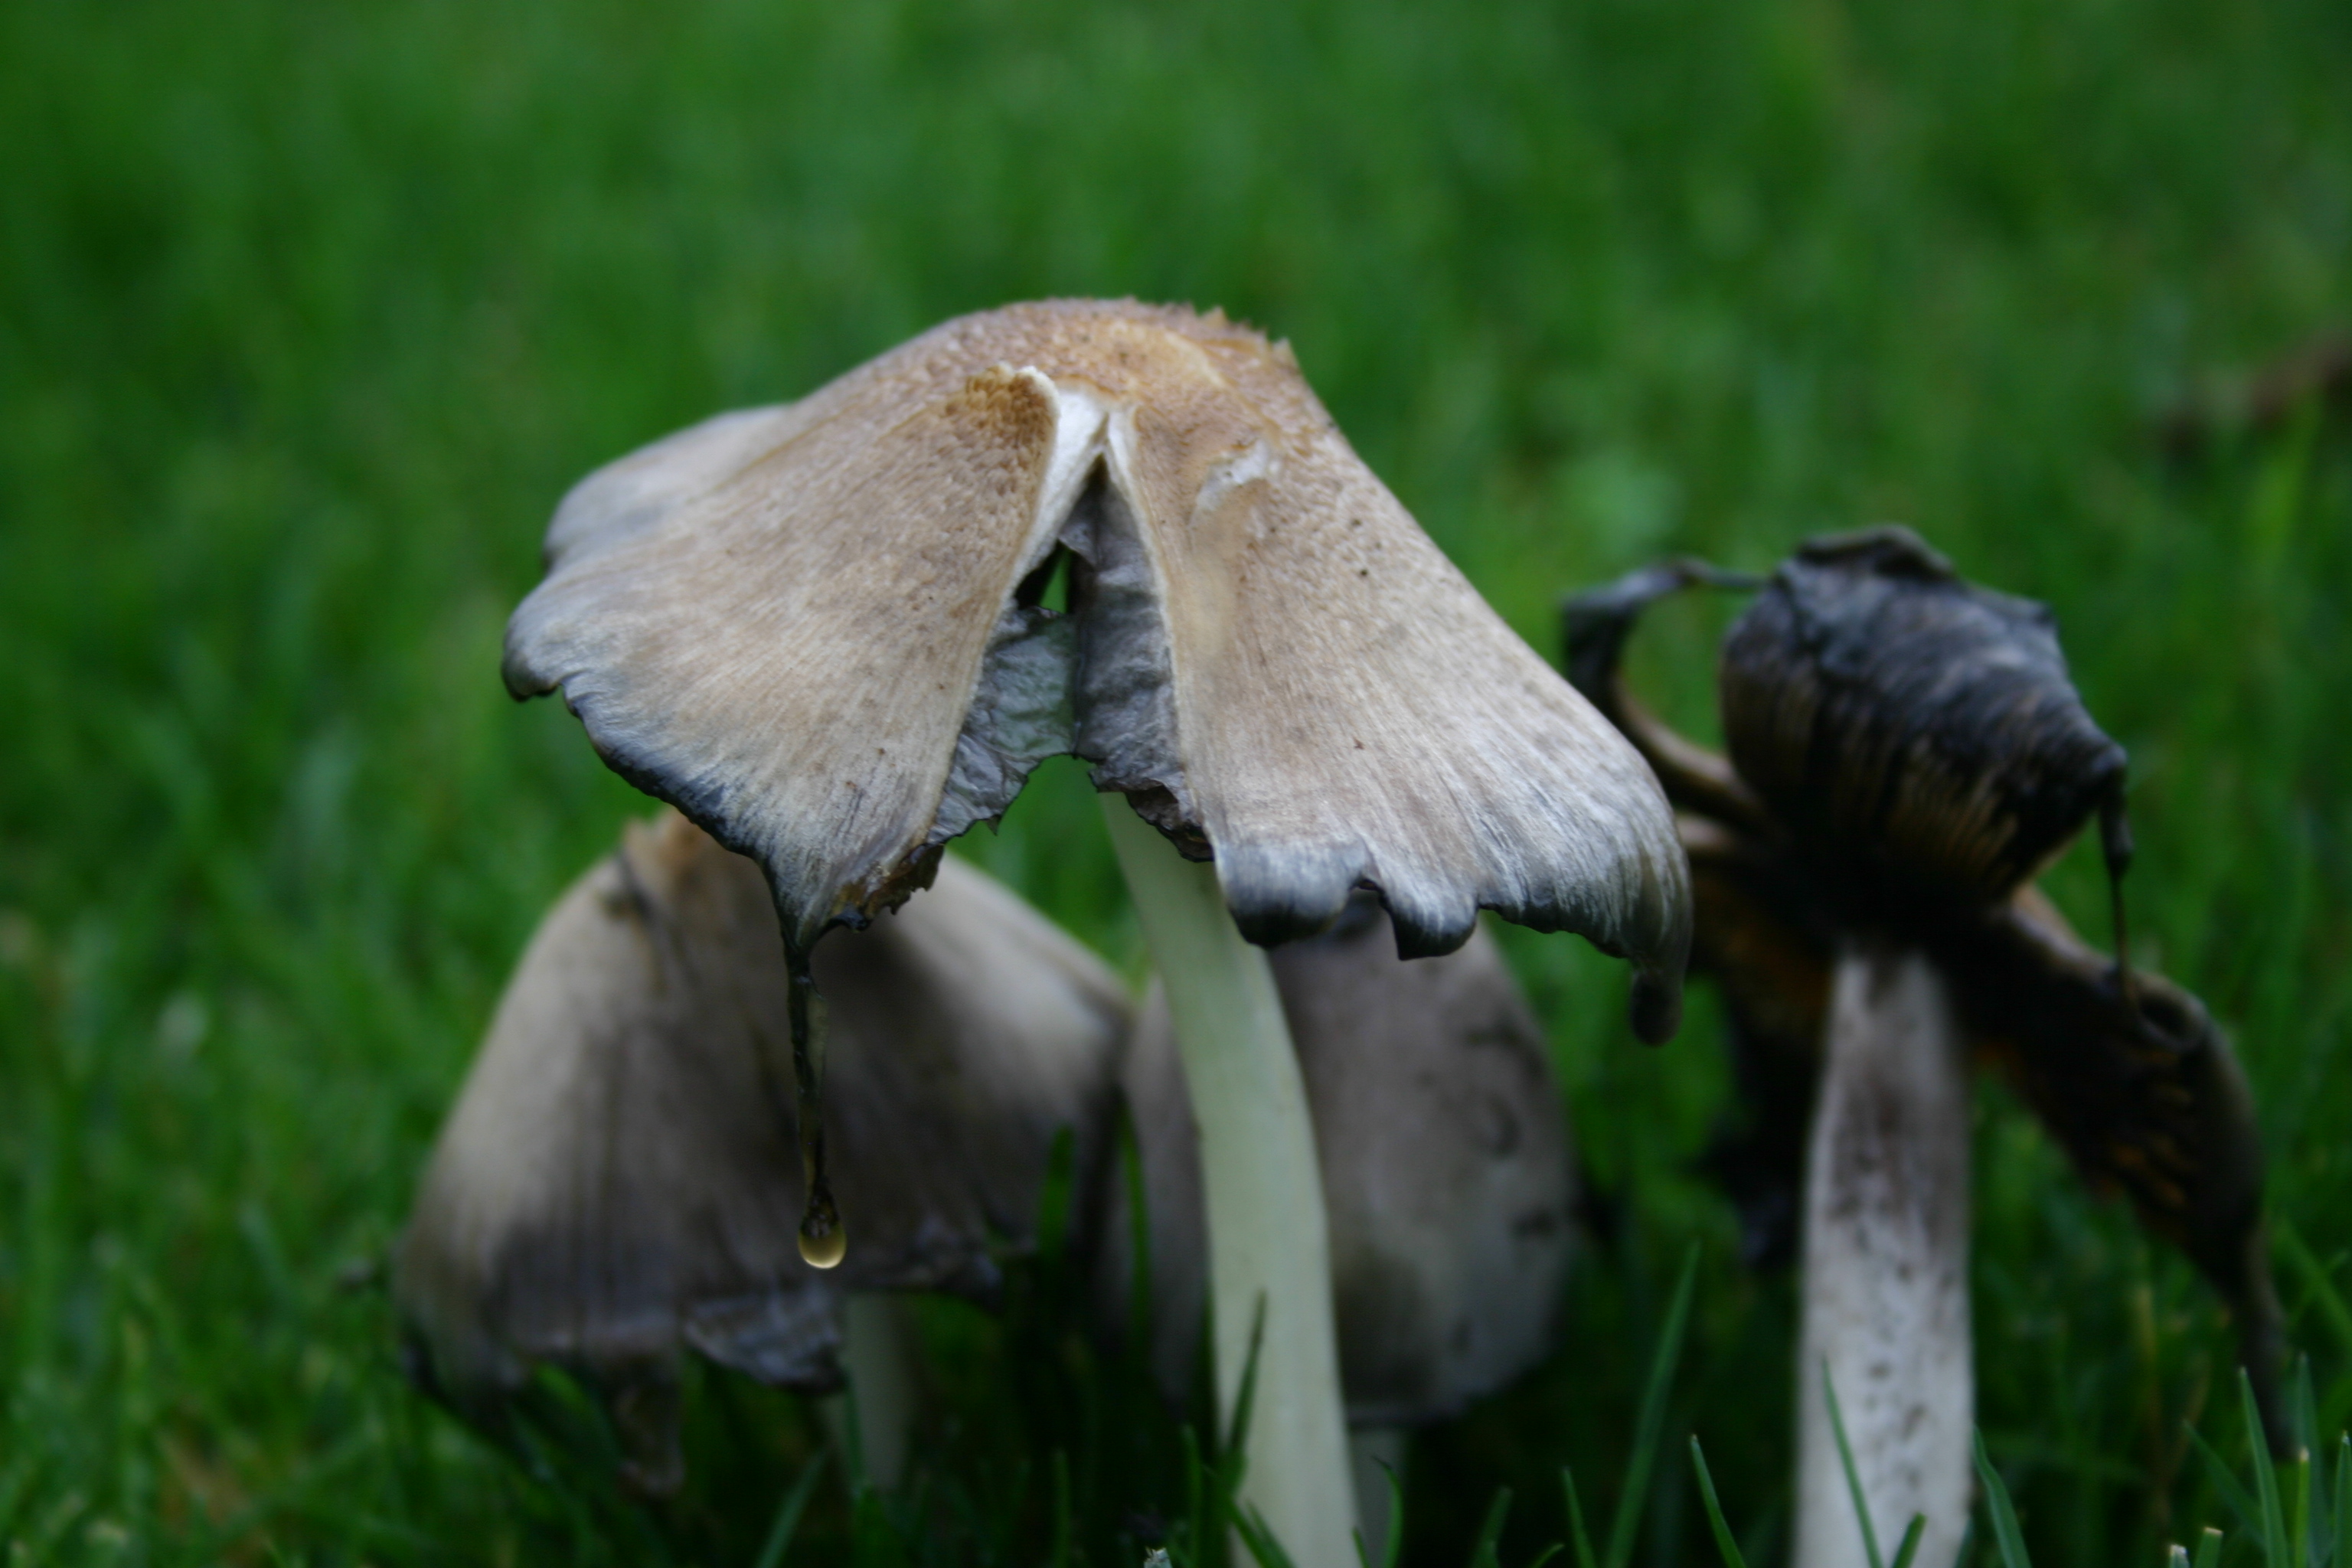 Dripping mushrooms in green grass. 